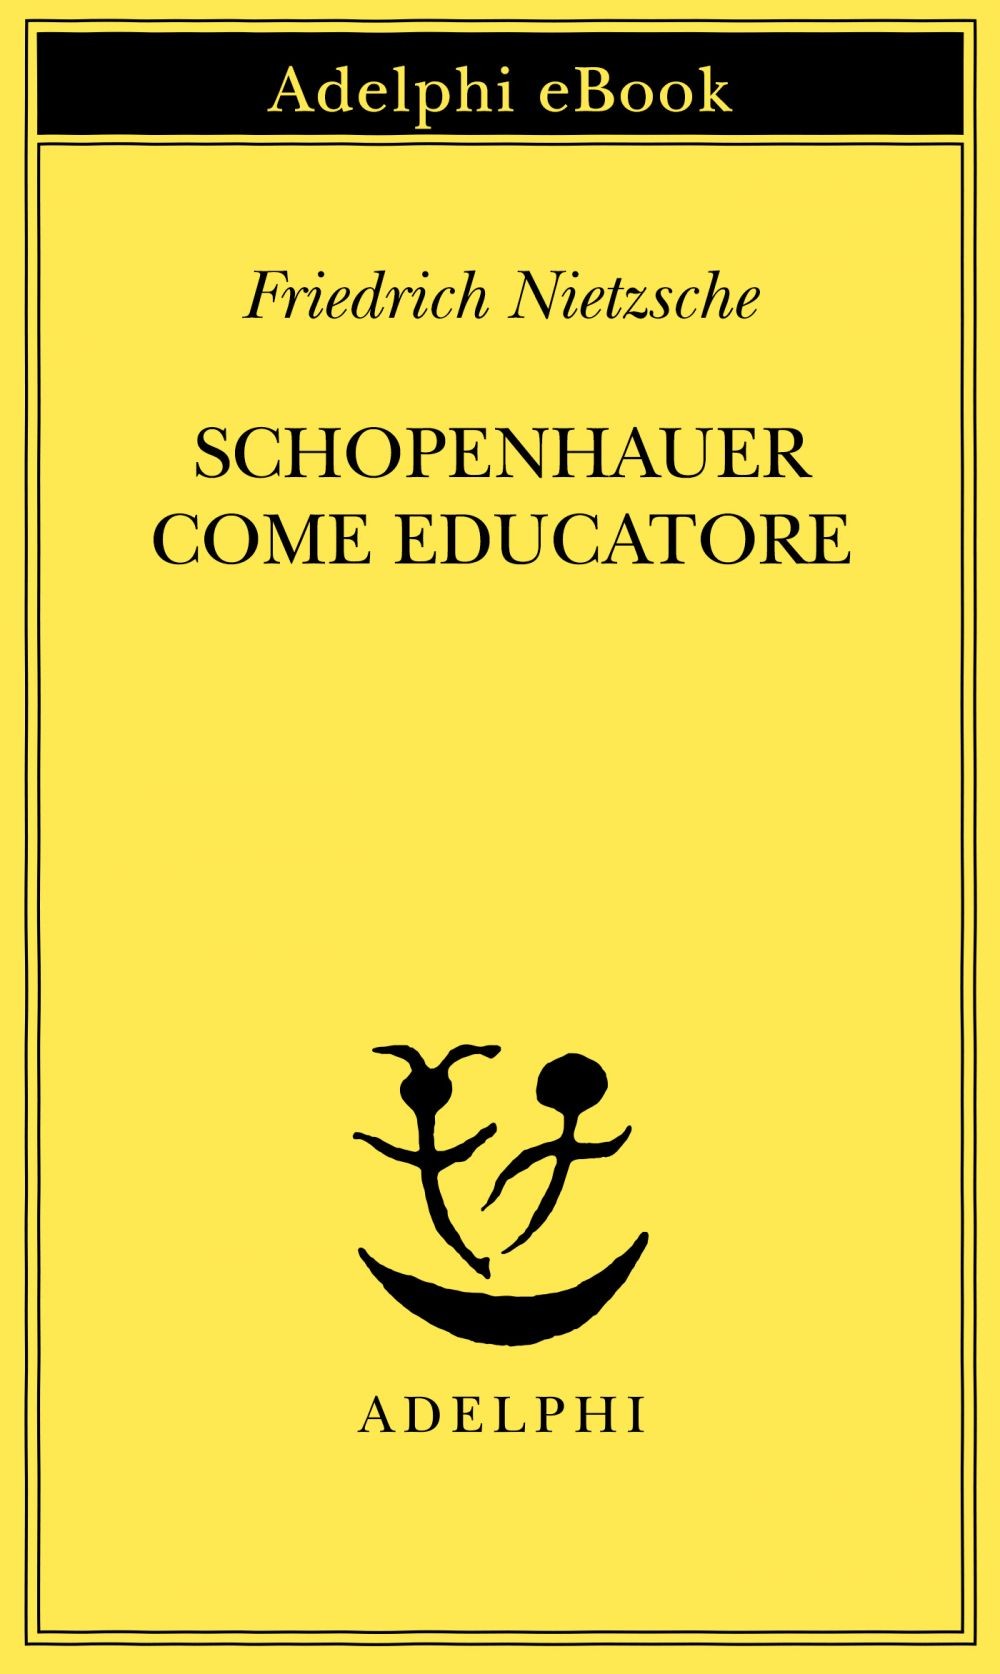 Schopenhauer come educatore - Librerie.coop